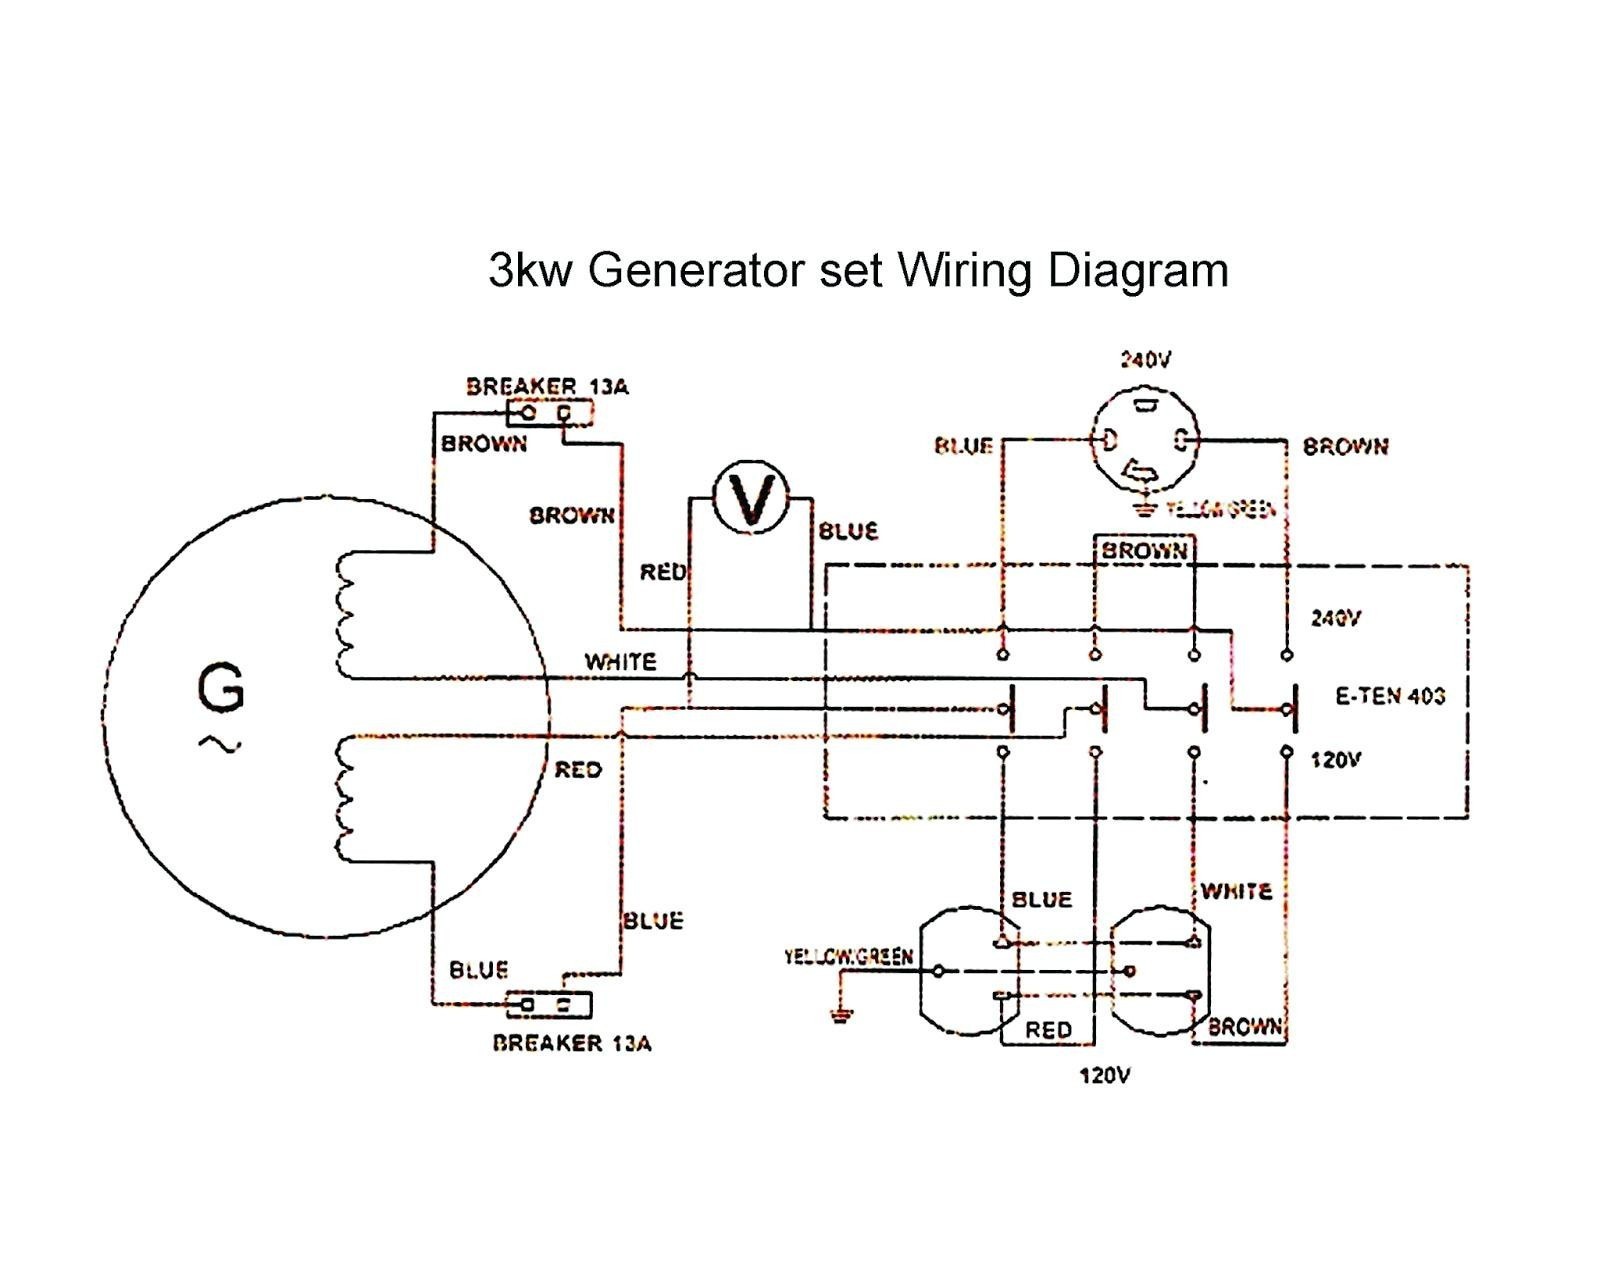 Wiring Diagram Home Generator New Wiring Diagram Backup Generator & Schematic Diagram Generator